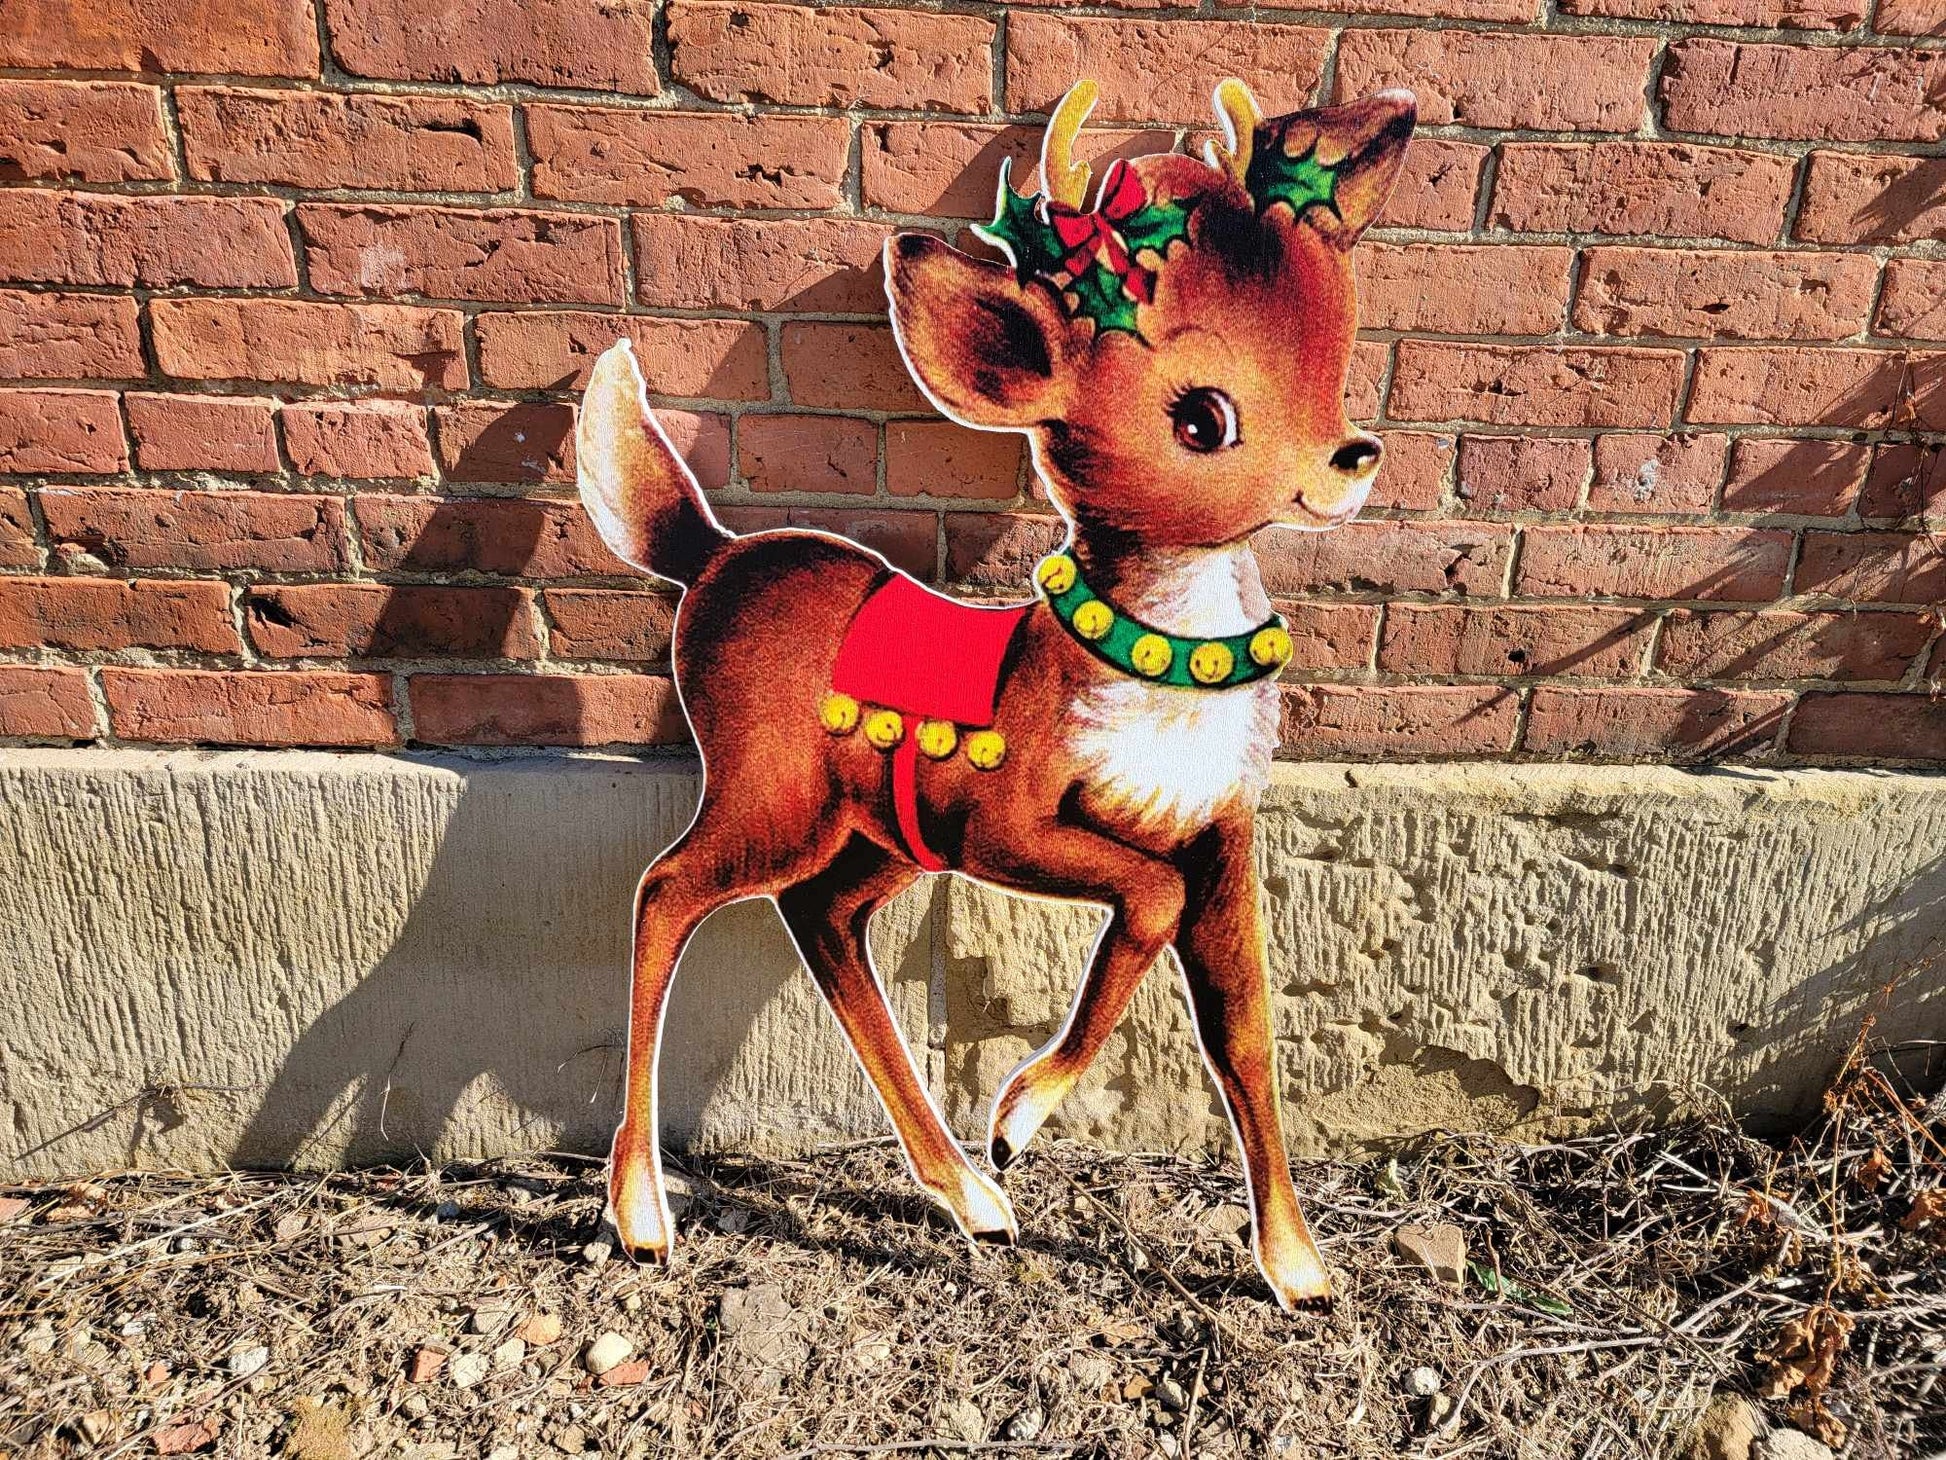 Vintage Yard Art PVC Reindeer Baby Holly Bells Yard Decor Christmas Outdoor Weather Proof Printed image Yard Decor